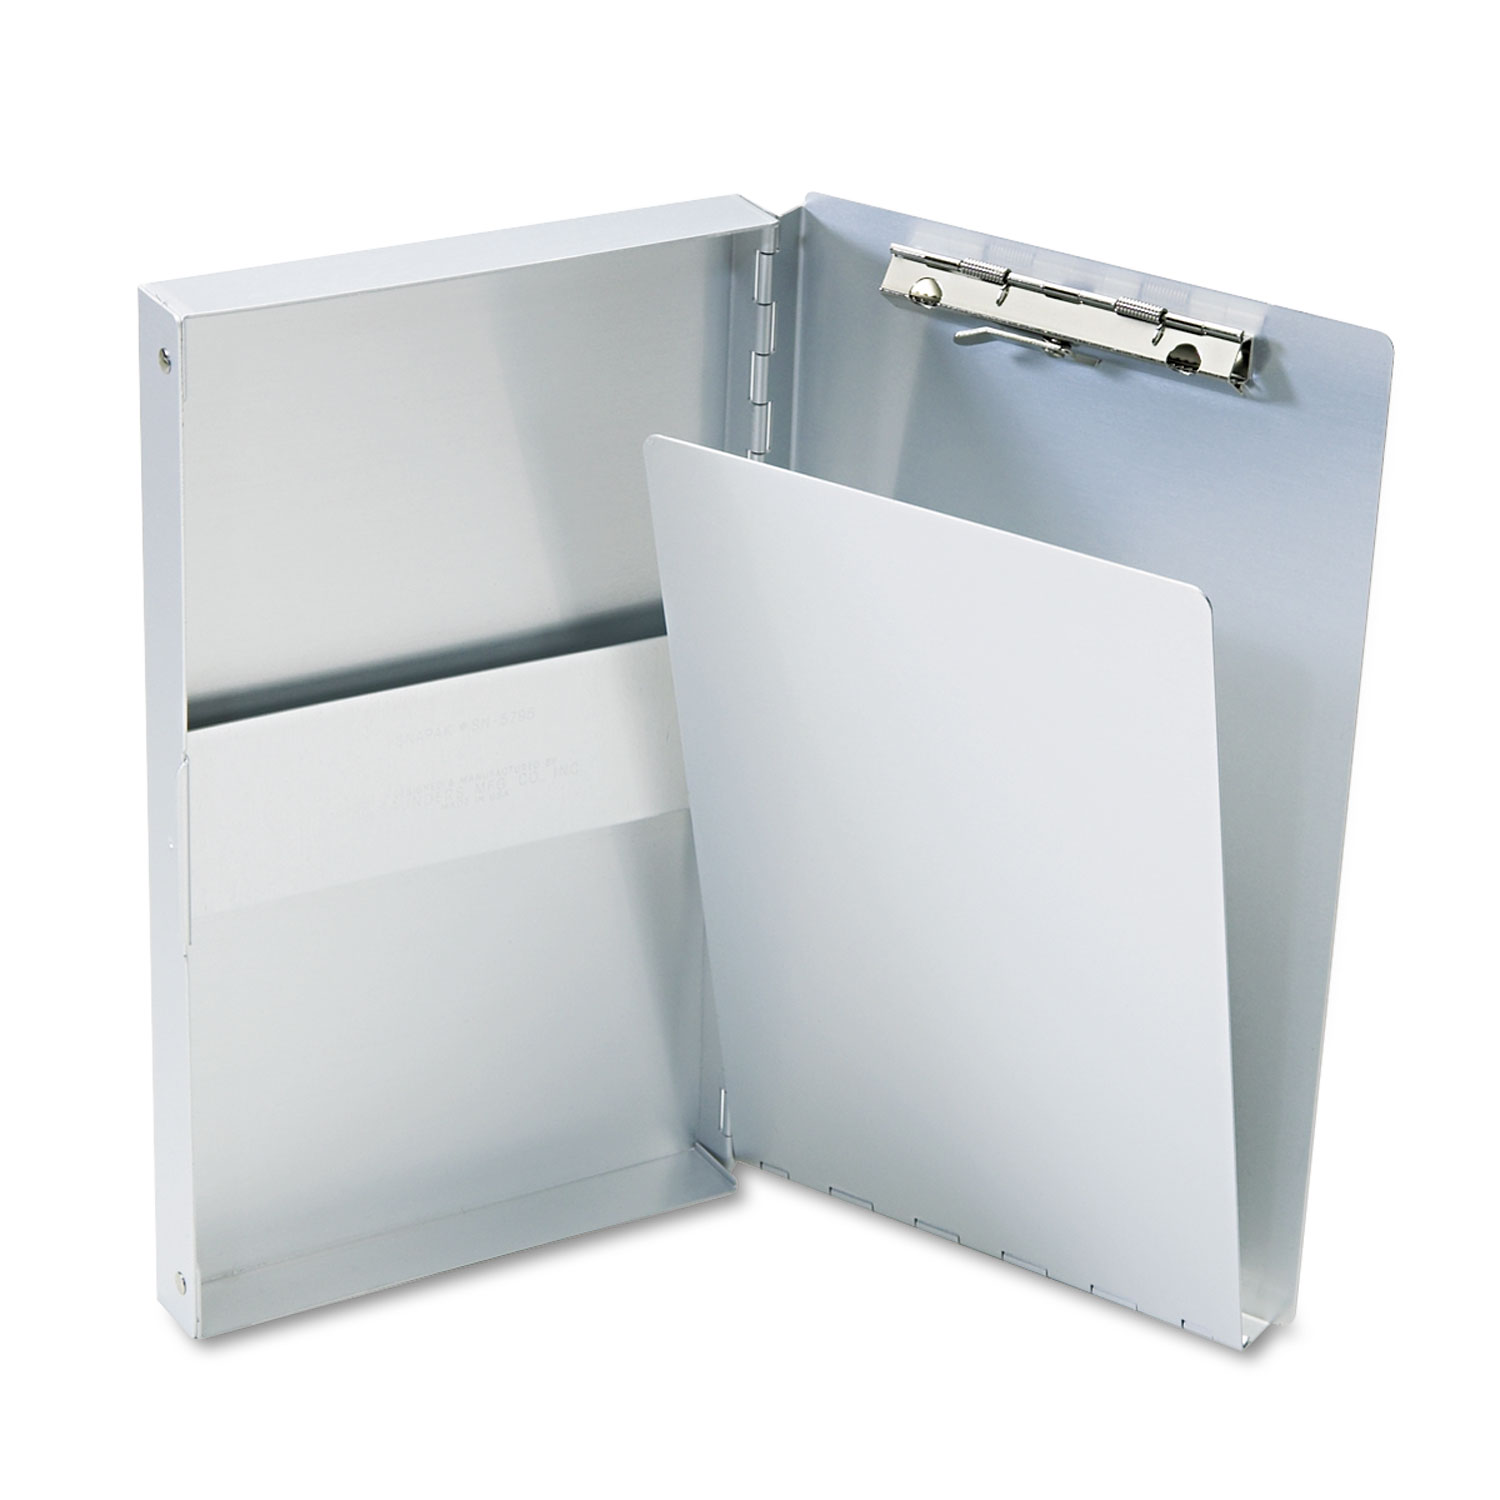 Snapak Aluminum Side-Open Forms Folder, 3/8" Clip Cap, 5.66 x 9.5 Sheets, Silver